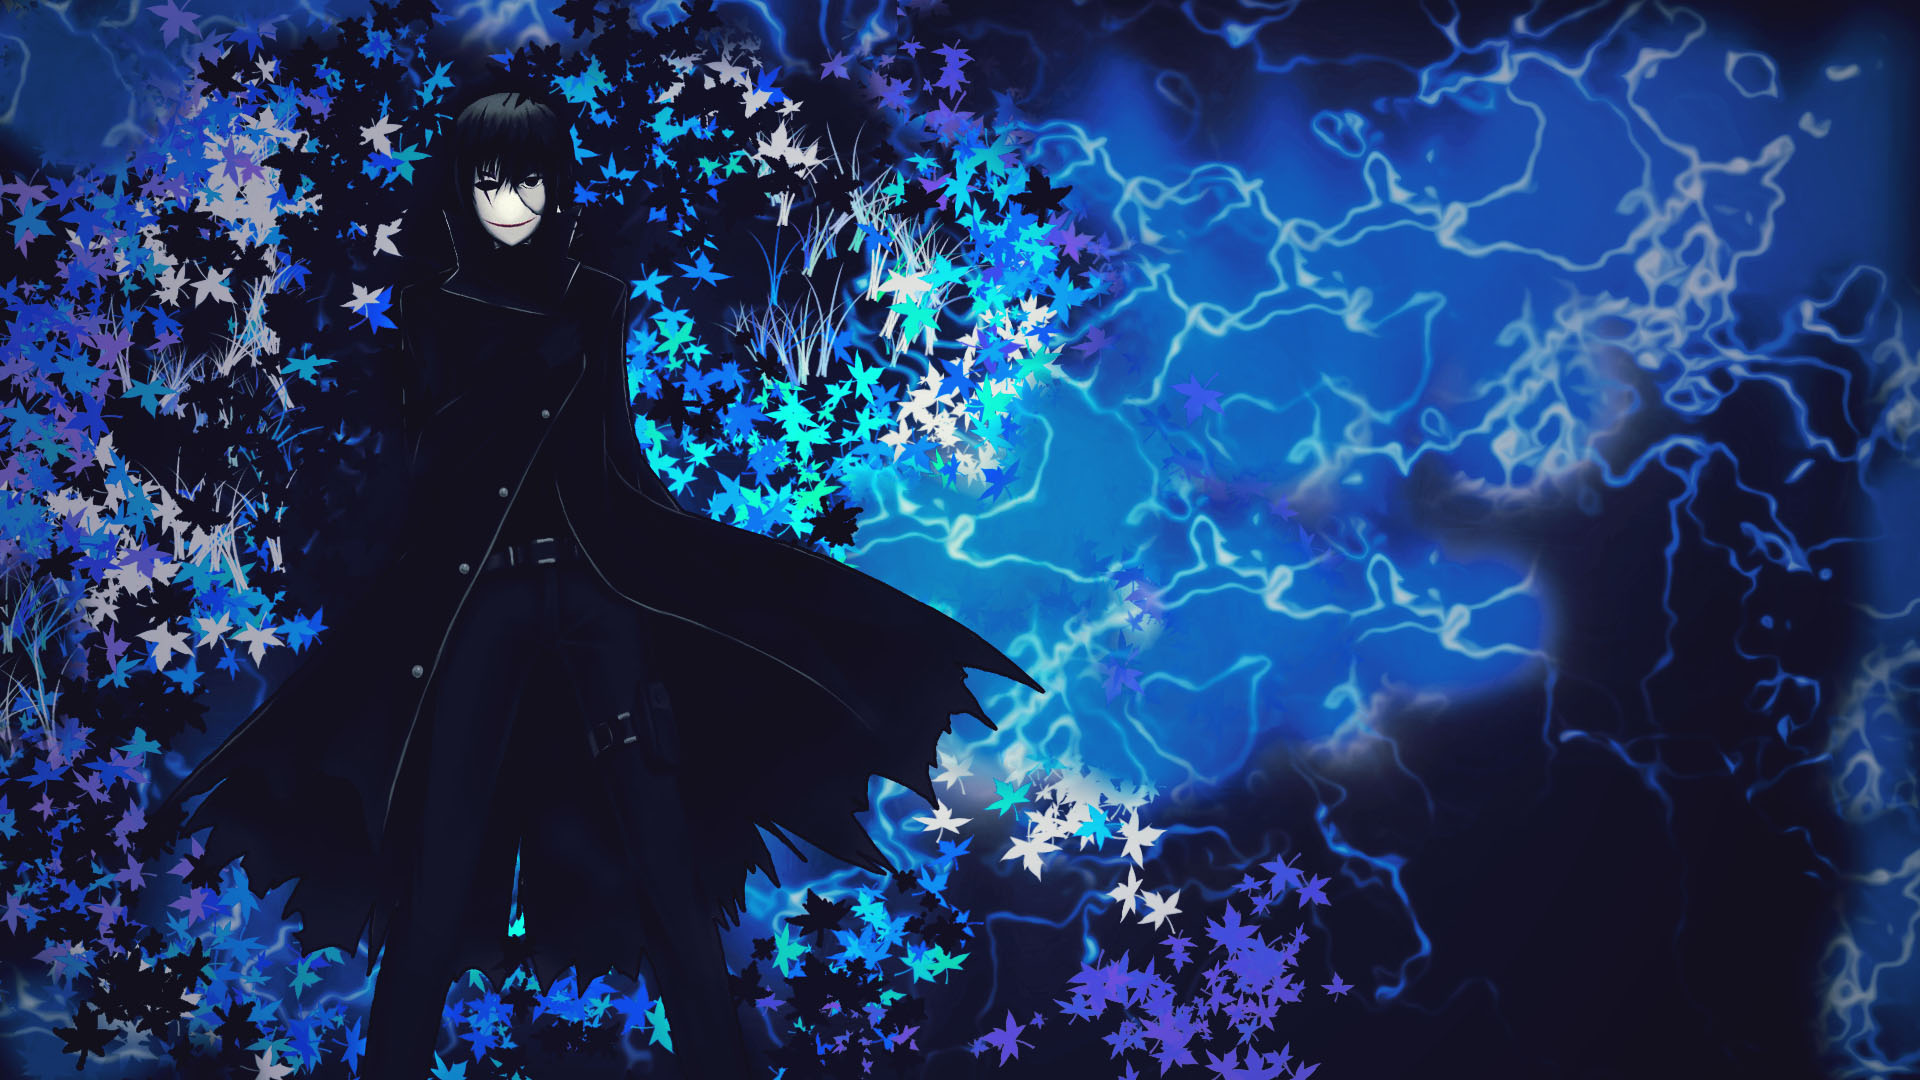 Anime Darker Than Black HD Wallpaper | Background Image